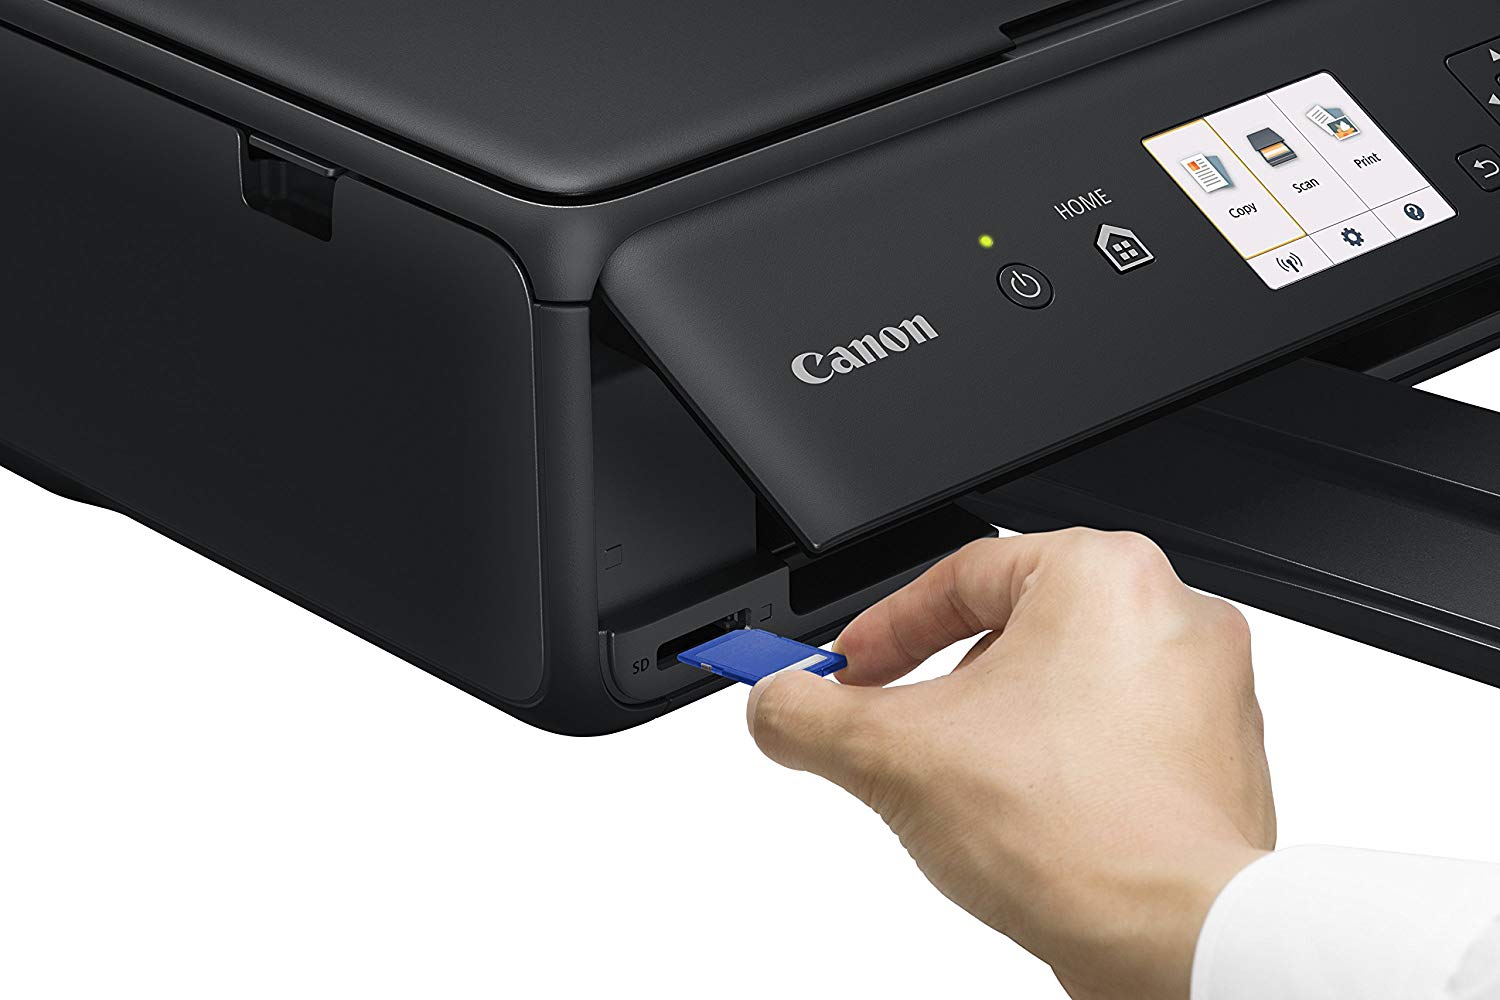 Black Canon PIXMA TS5050 All-In-One Inkjet Printer Canon Printer + XL Compatible Ink Bundle